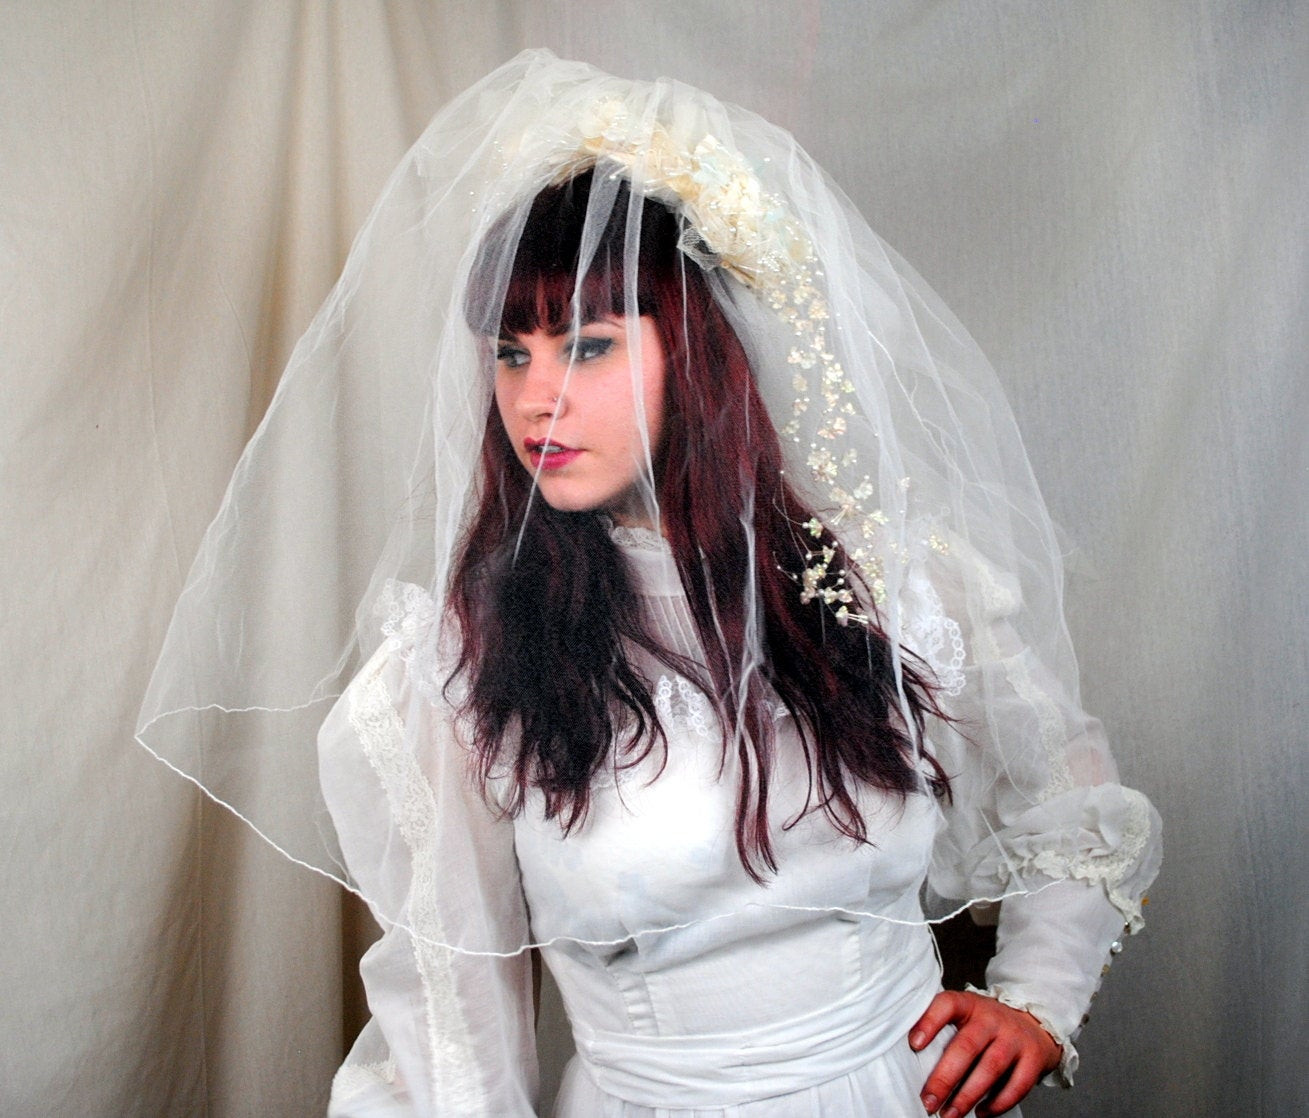 Vintage Wedding Veils And Headpieces
 Vintage 80s Wedding Crown Veil Headpiece by RogueRetro on Etsy